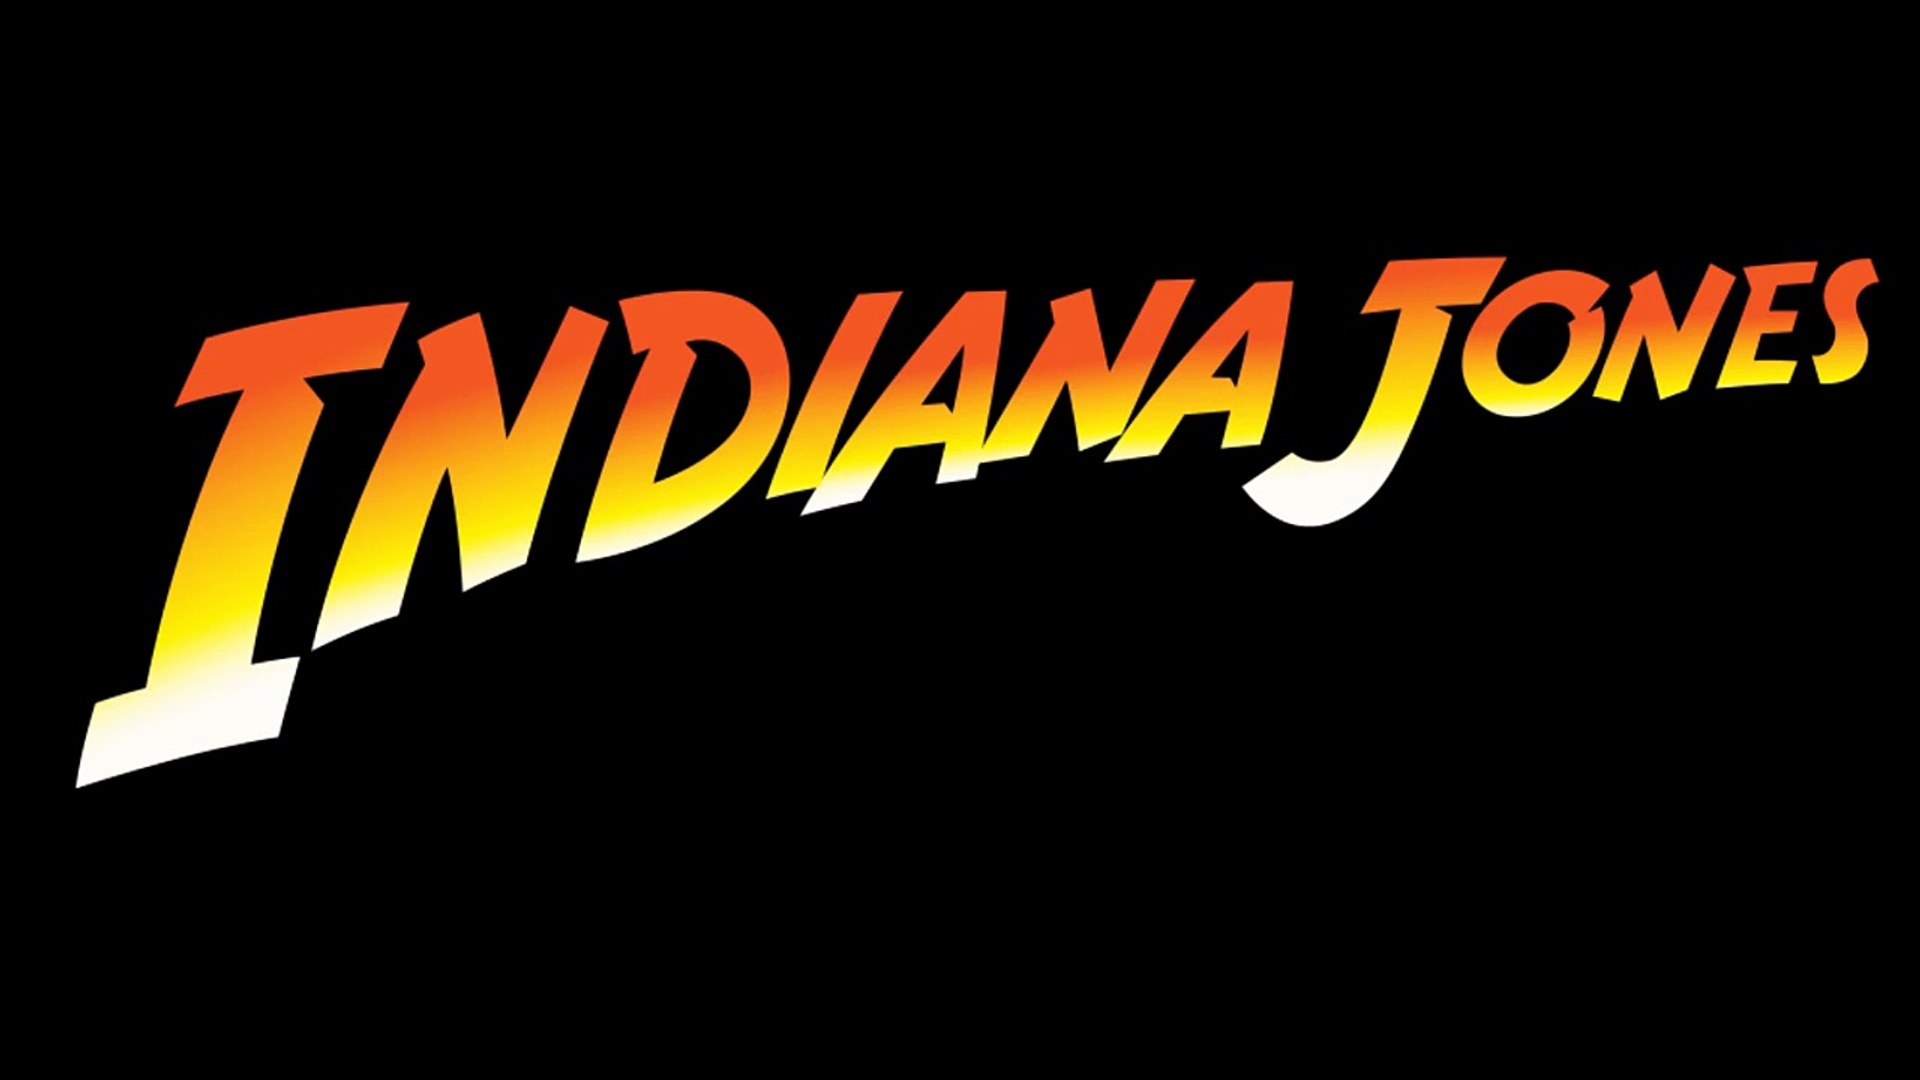 Indiana Jones Theme Song [HD] - Dailymotion Video